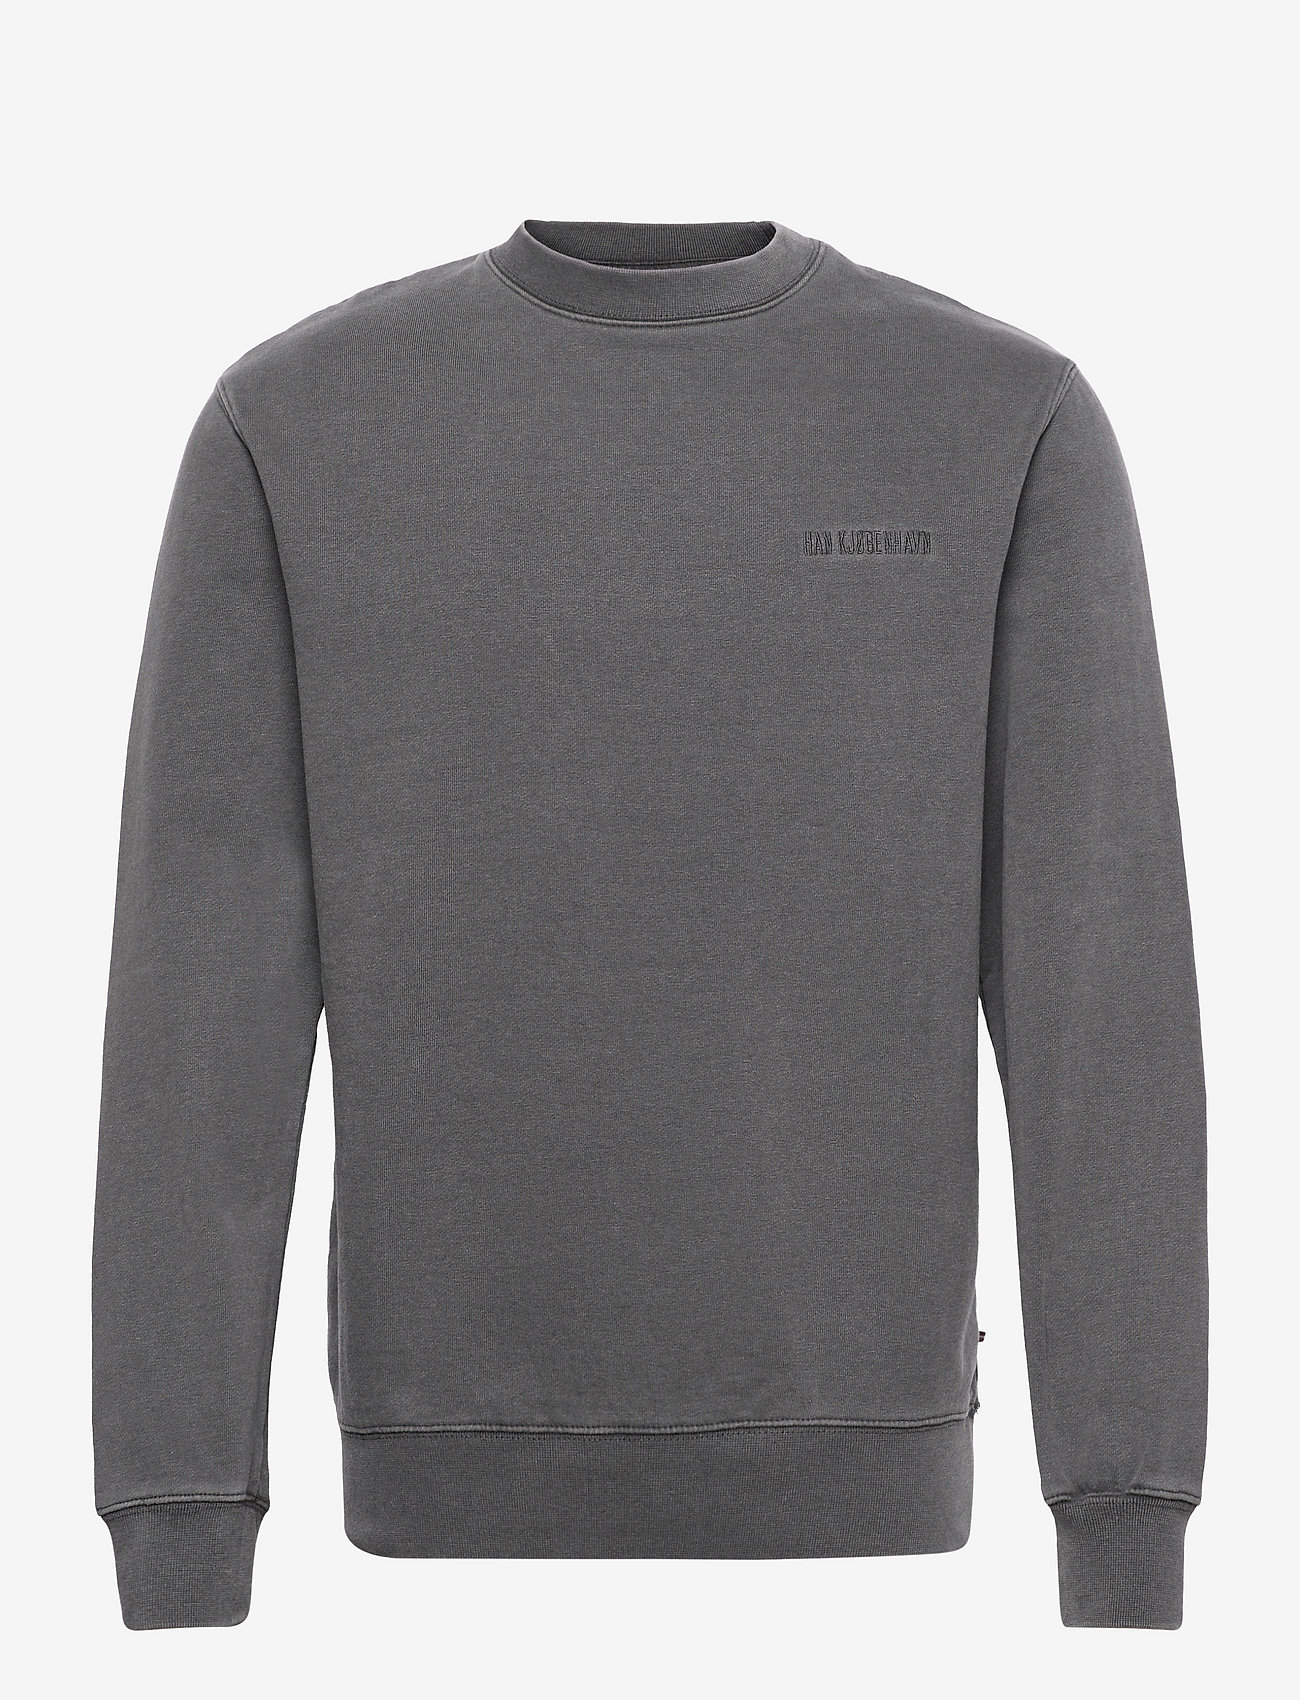 HAN Kjøbenhavn - Casual Crew - bluzy z kapturem - dark grey logo - 0